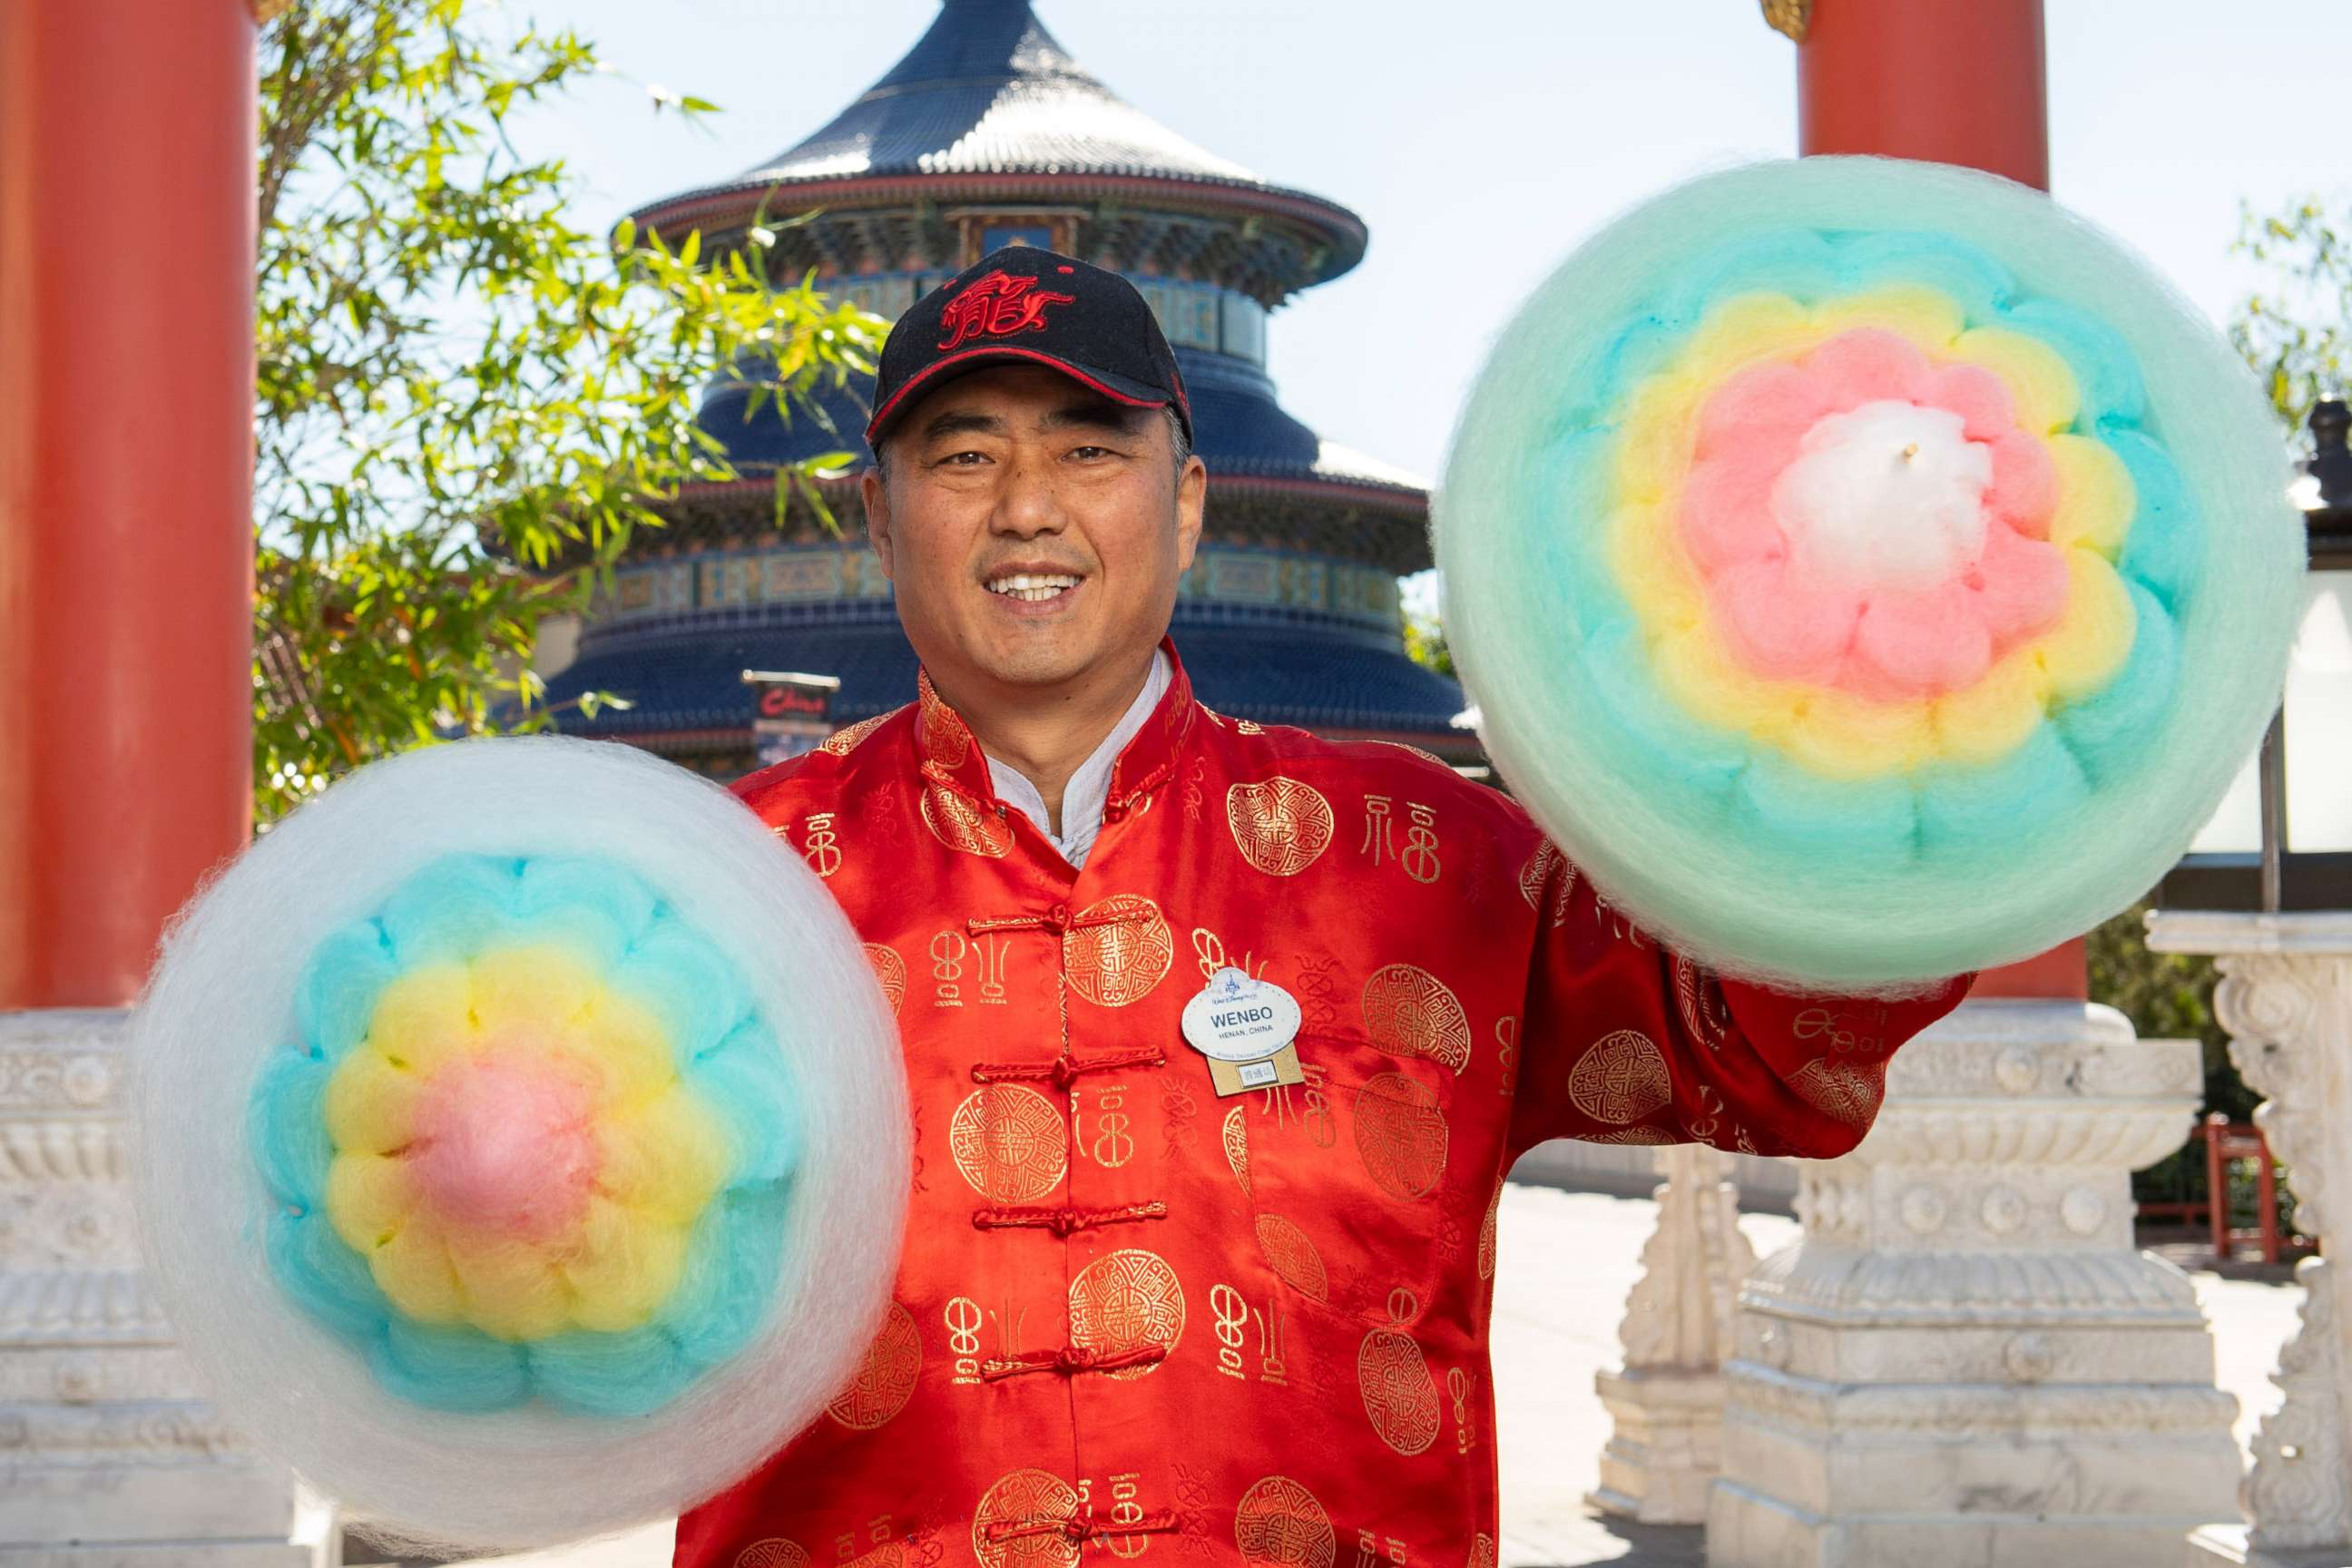 PHOTO: A Disney Chef creates a 5-layer cotton candy treat at Disney World.